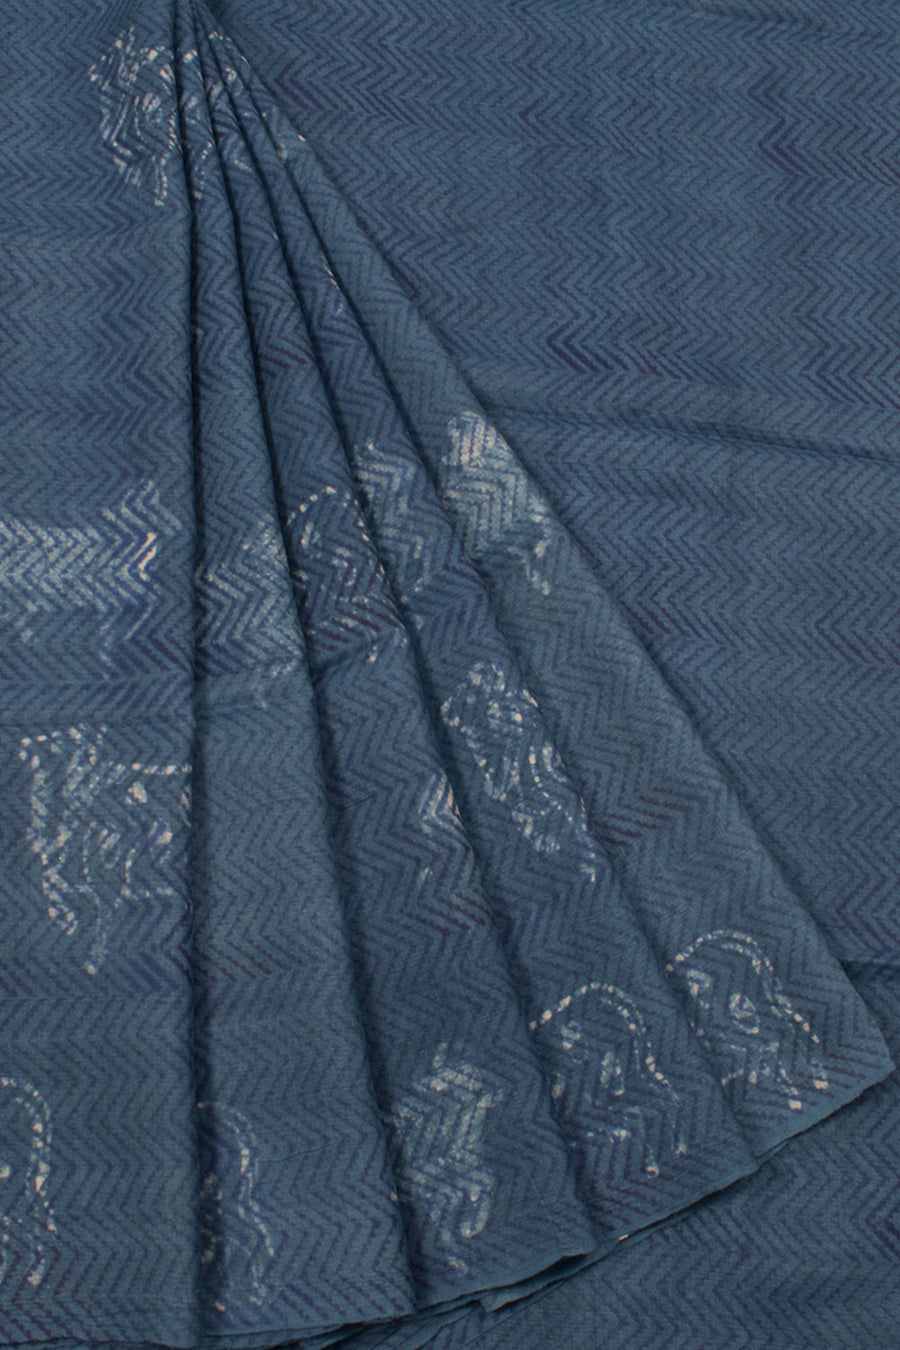 Hand Block Printed Tussur Silk Saree with Nandhi Motifs and Lehar Design 